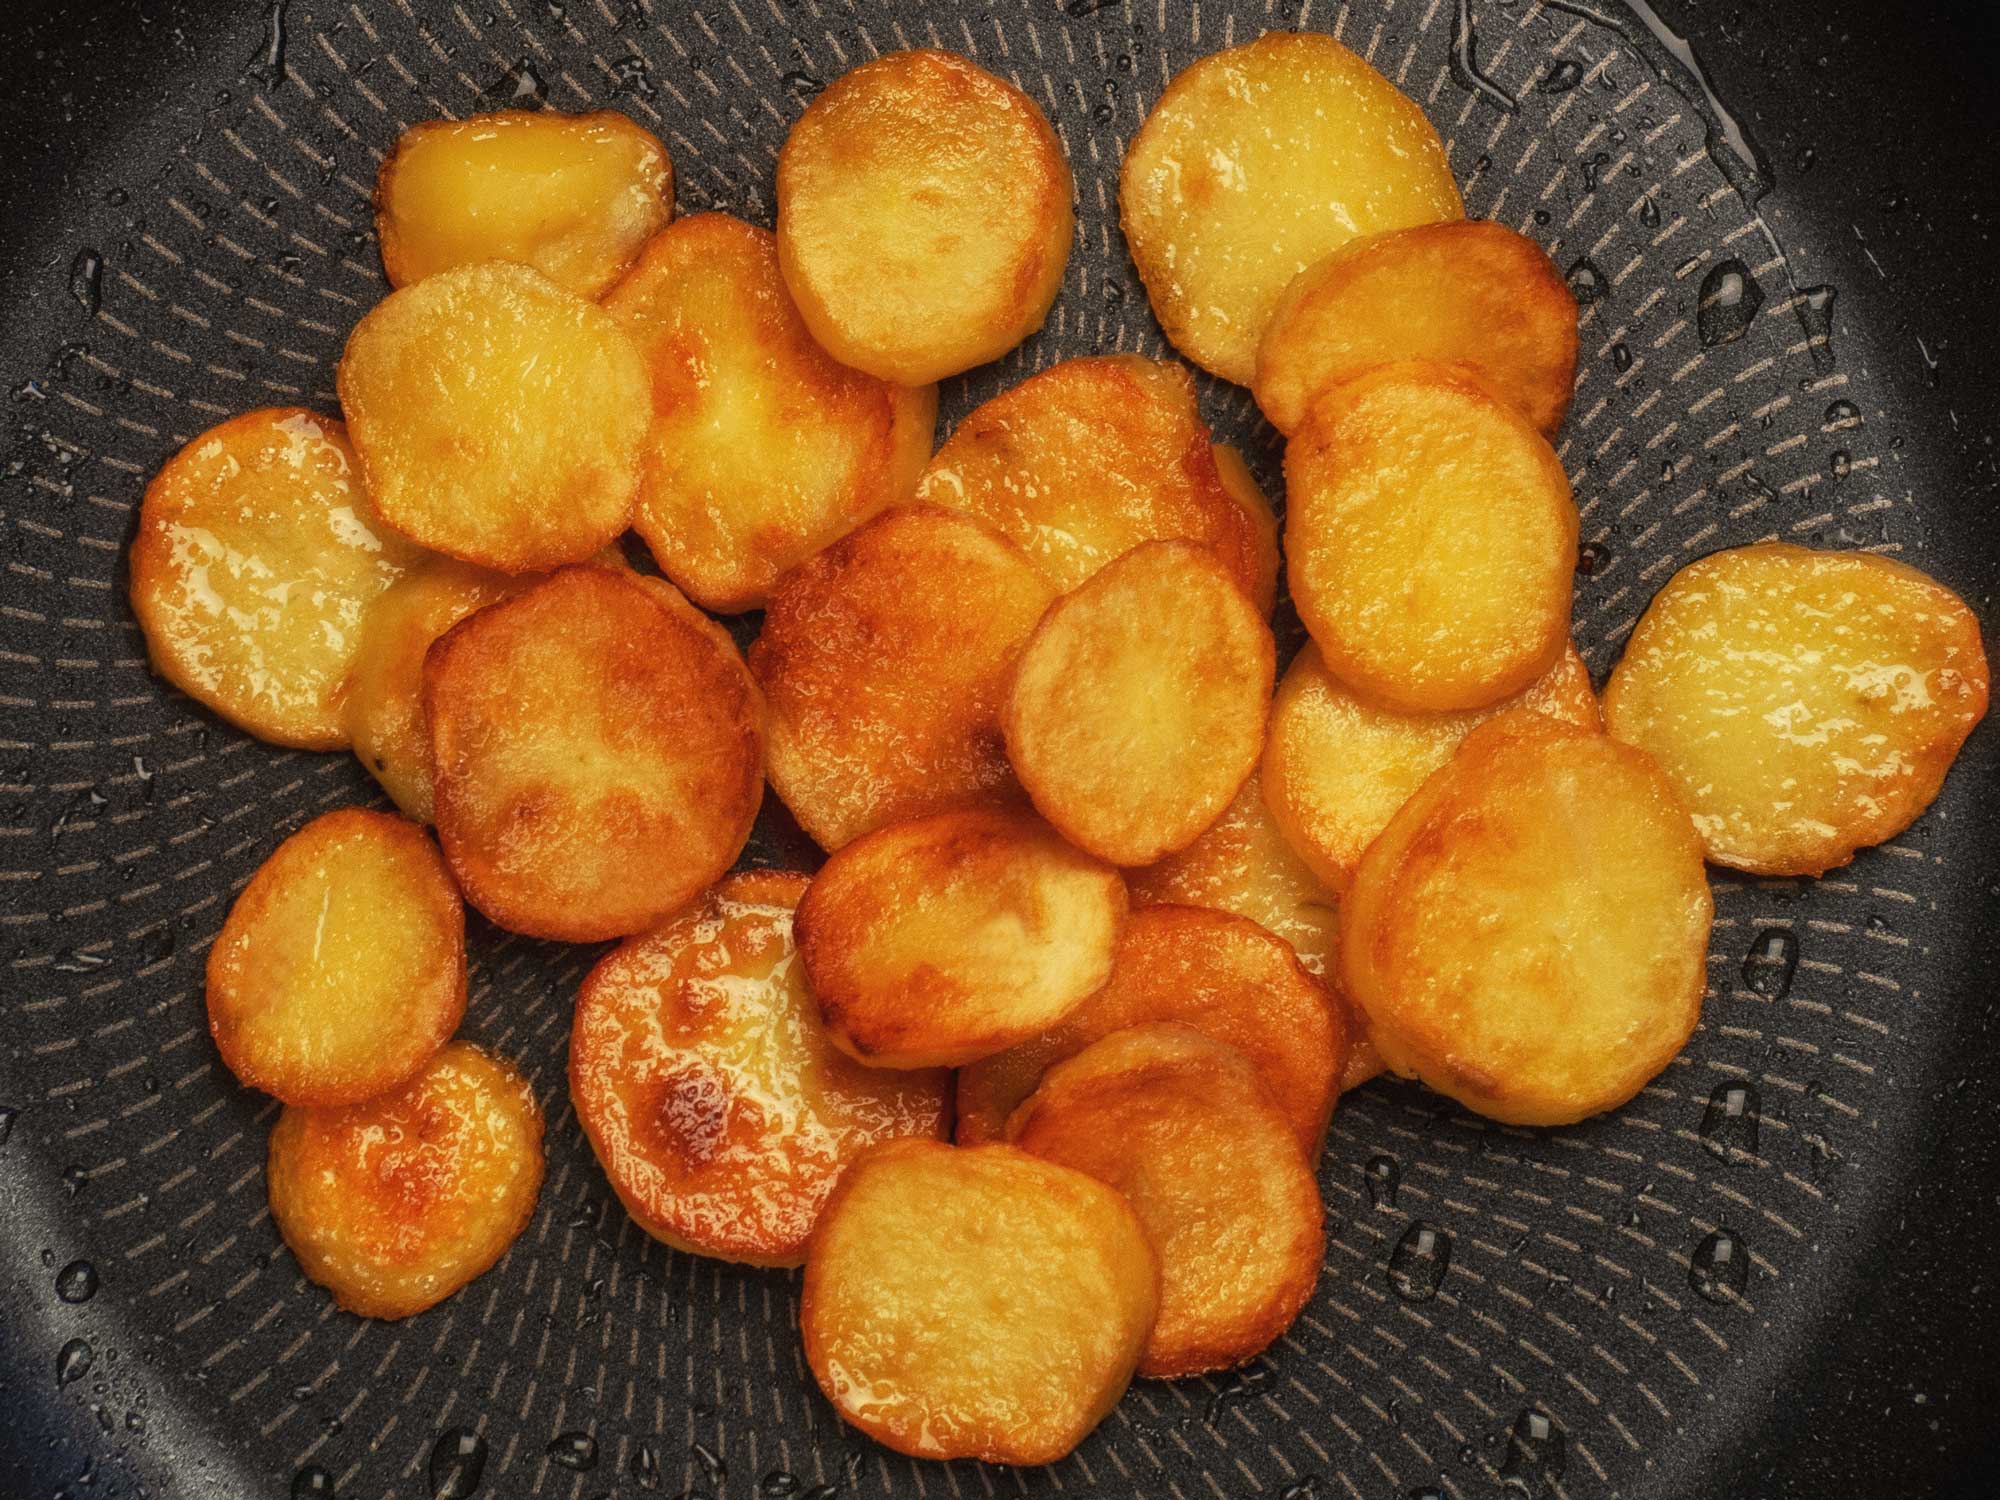 Wurstsalat mit Bratkartoffeln